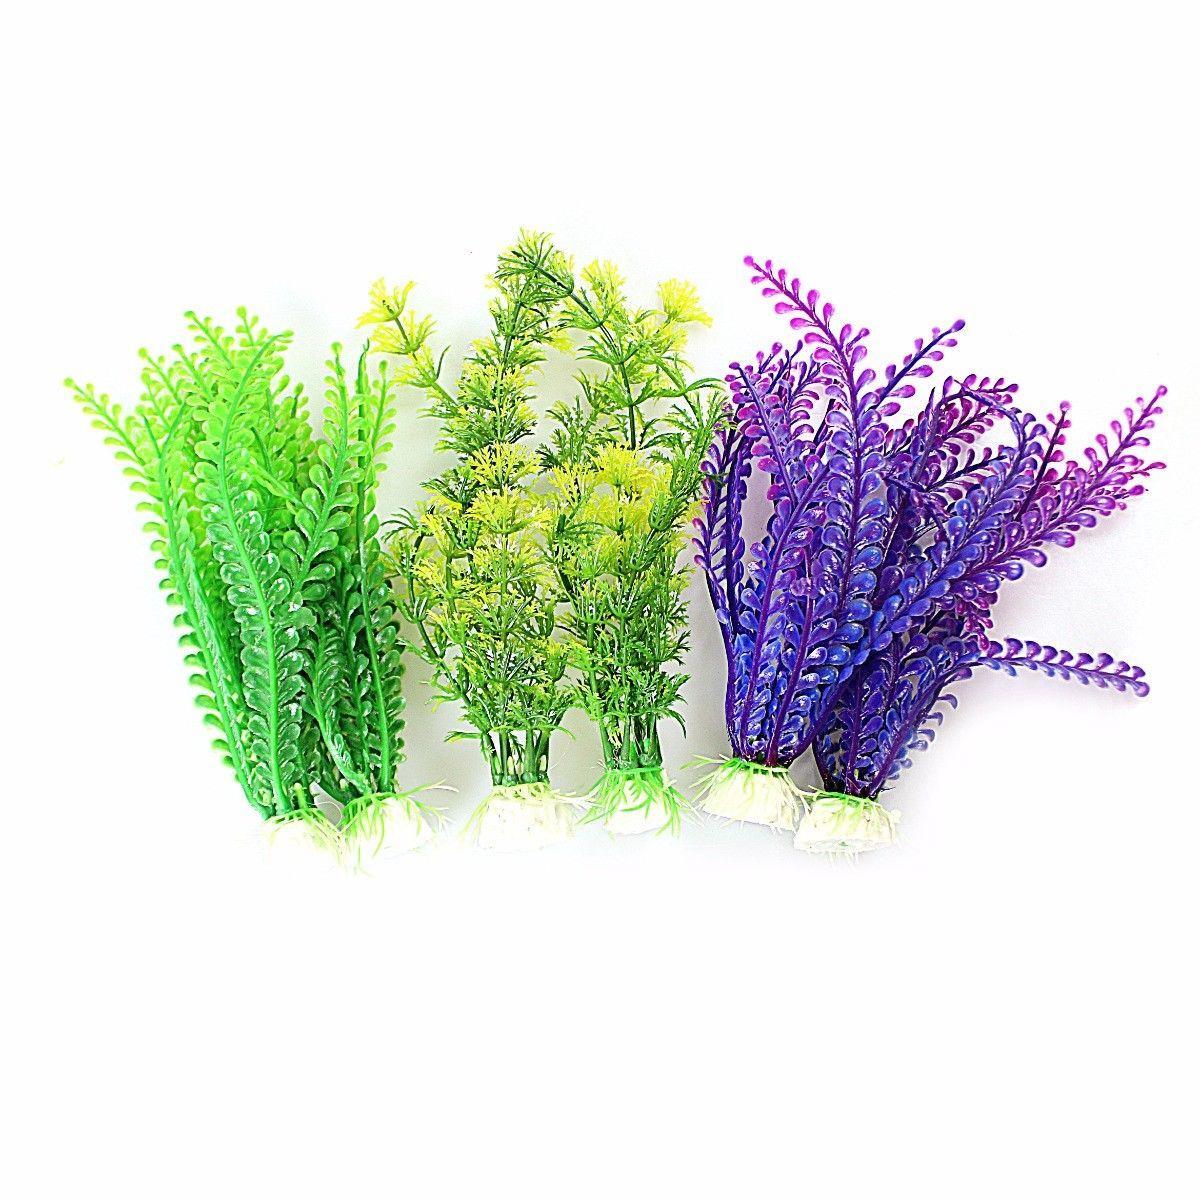 Artificial Plastic Aquarium Fish Tank Fern Algae Plant Decoration 18-20cm Pack of 2 Assorted Colours 0823 (Large Letter Rate)